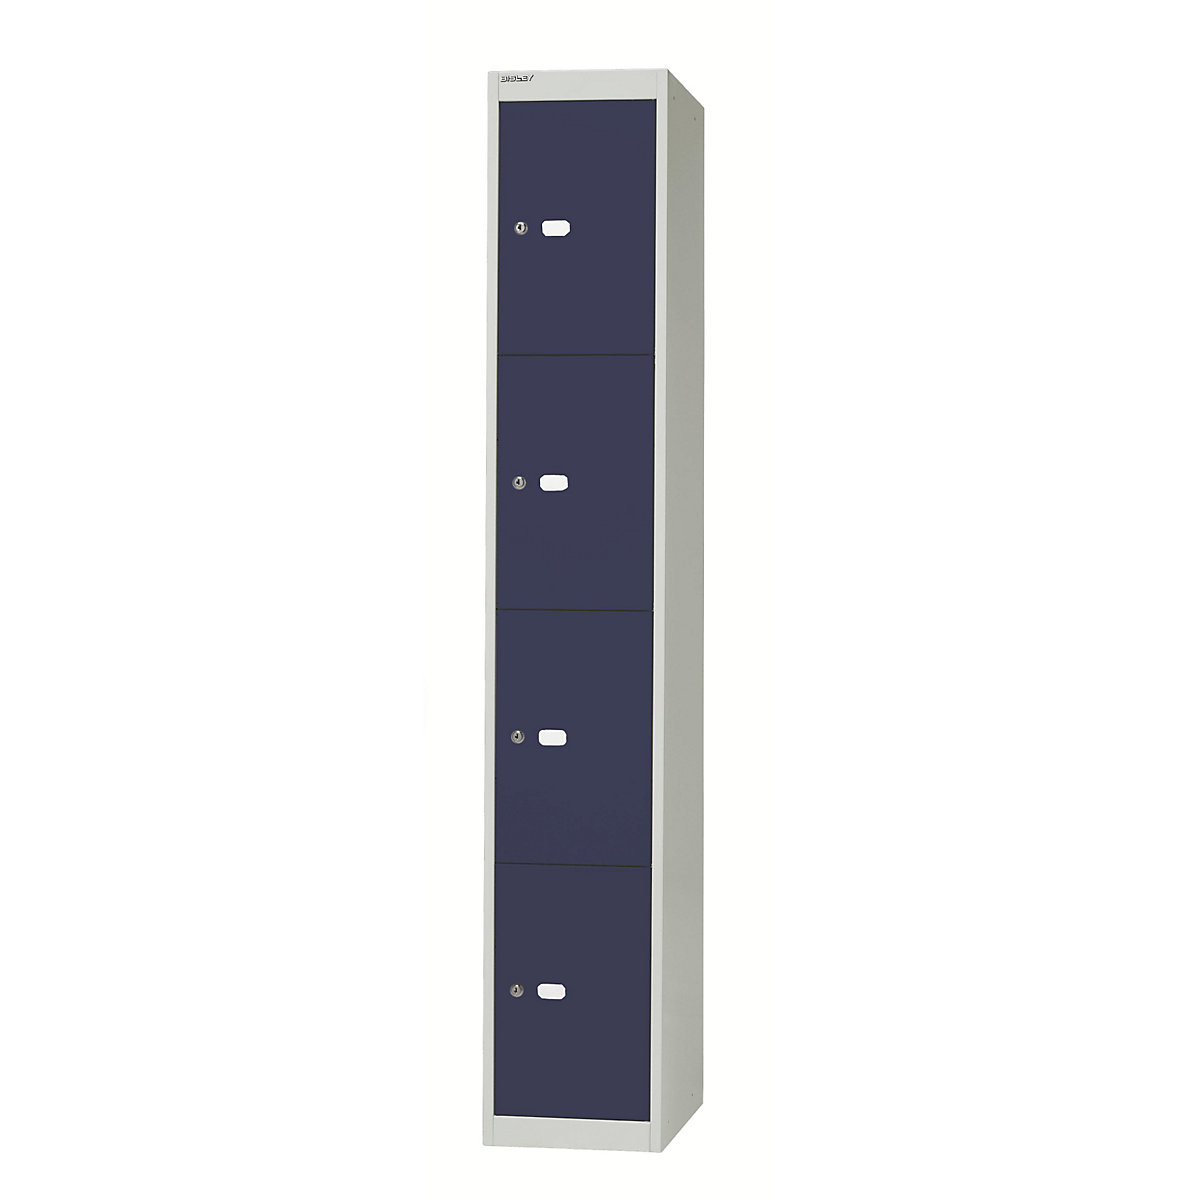 BISLEY OFFICE Schließfachsystem, Tiefe 457 mm, 4 Fächer, Korpusfarbe Lichtgrau, Türfarbe Oxfordblau